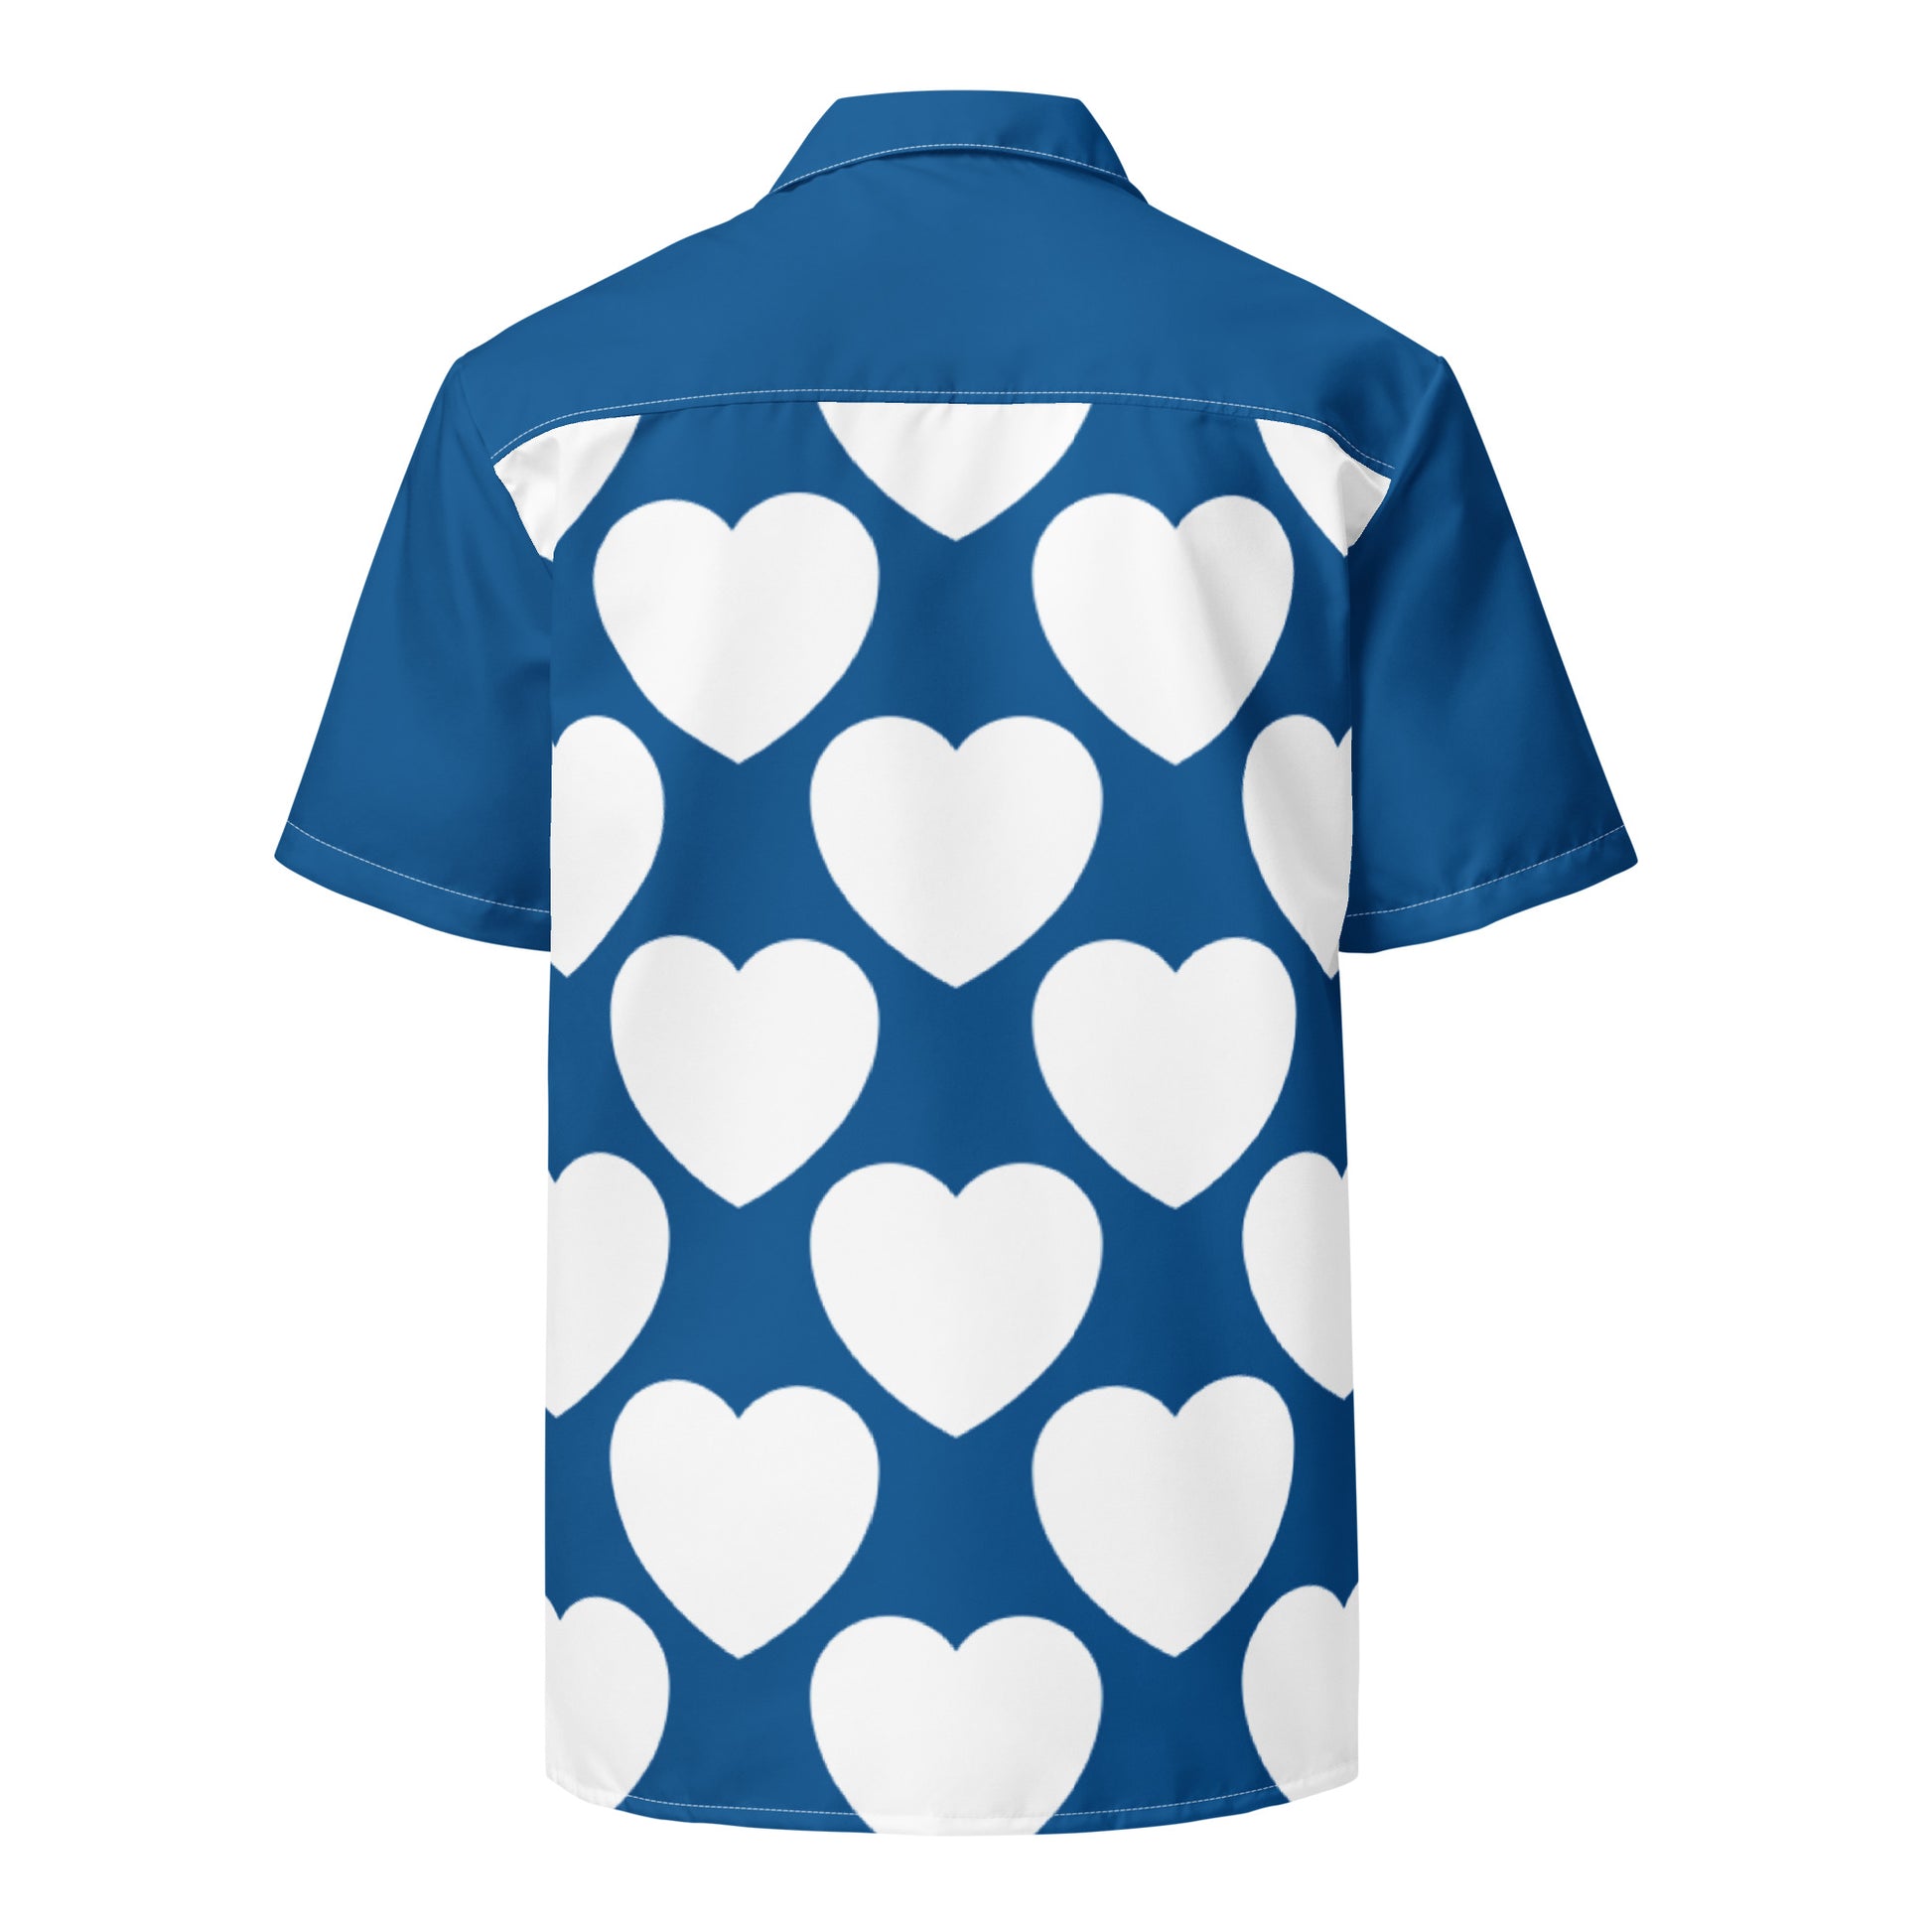 ELLIE LOVE fin -2- Unisex button shirt